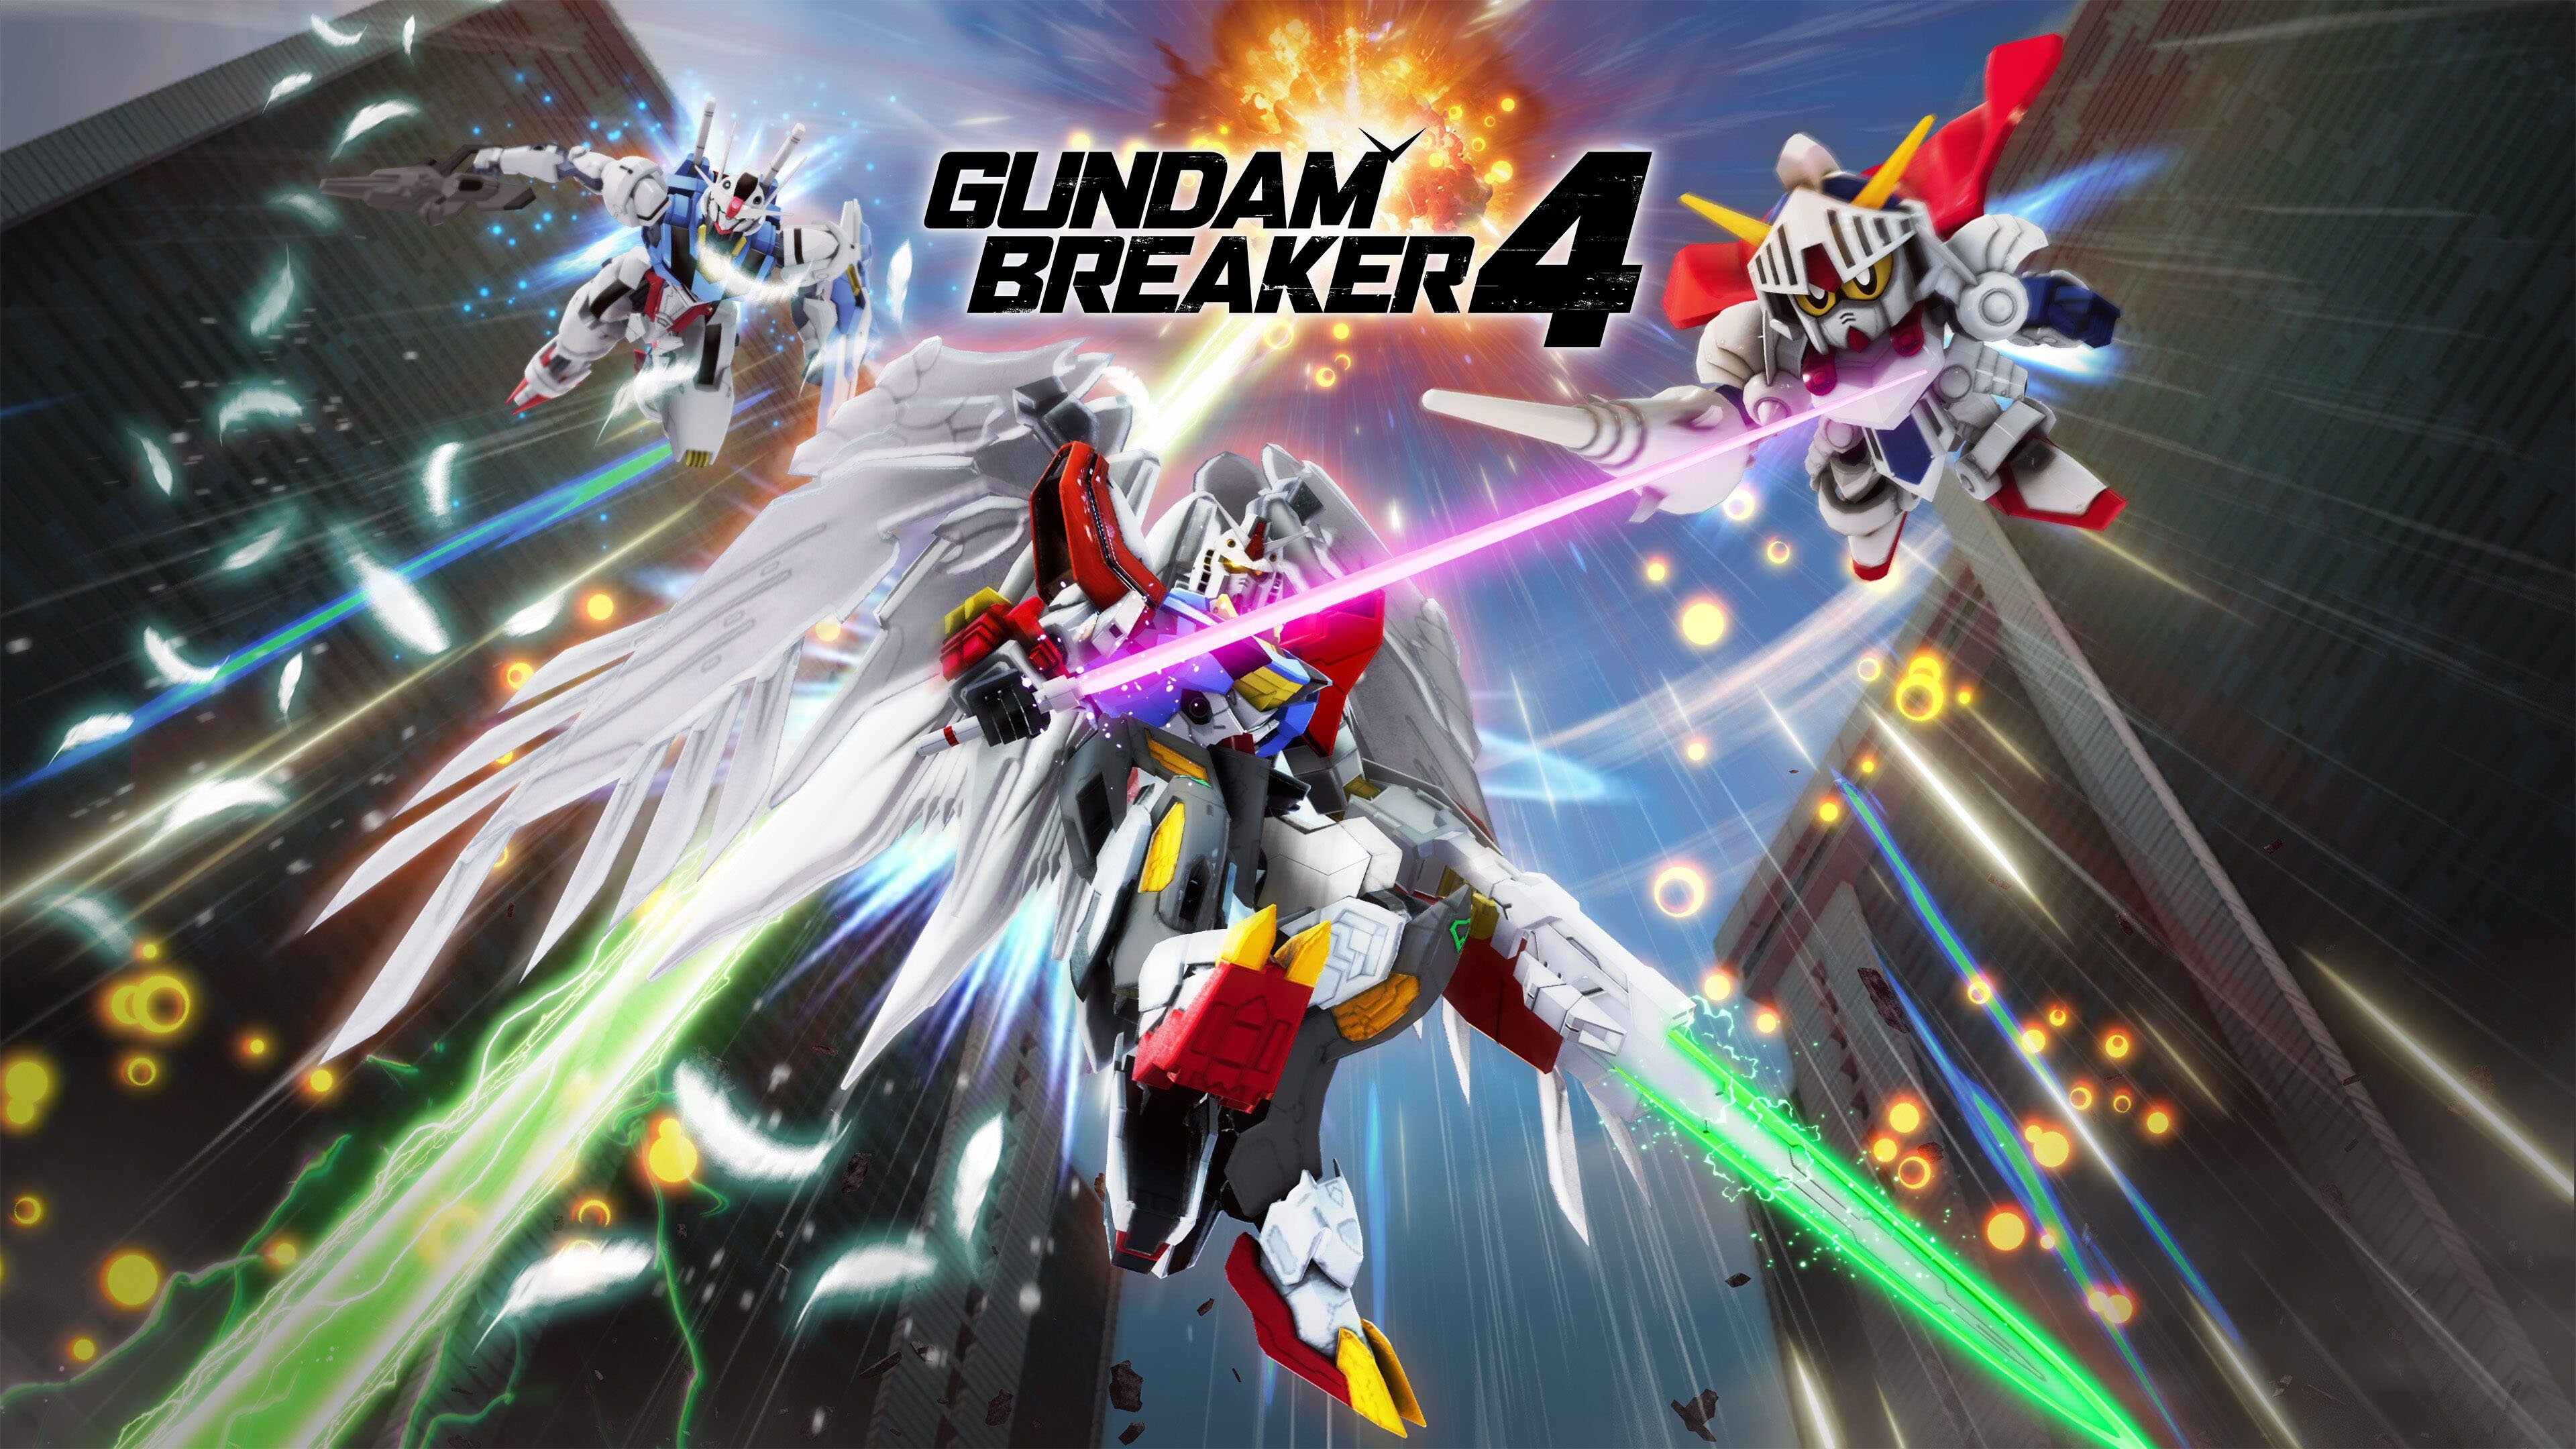 Gundam Breaker 4 launches August 29